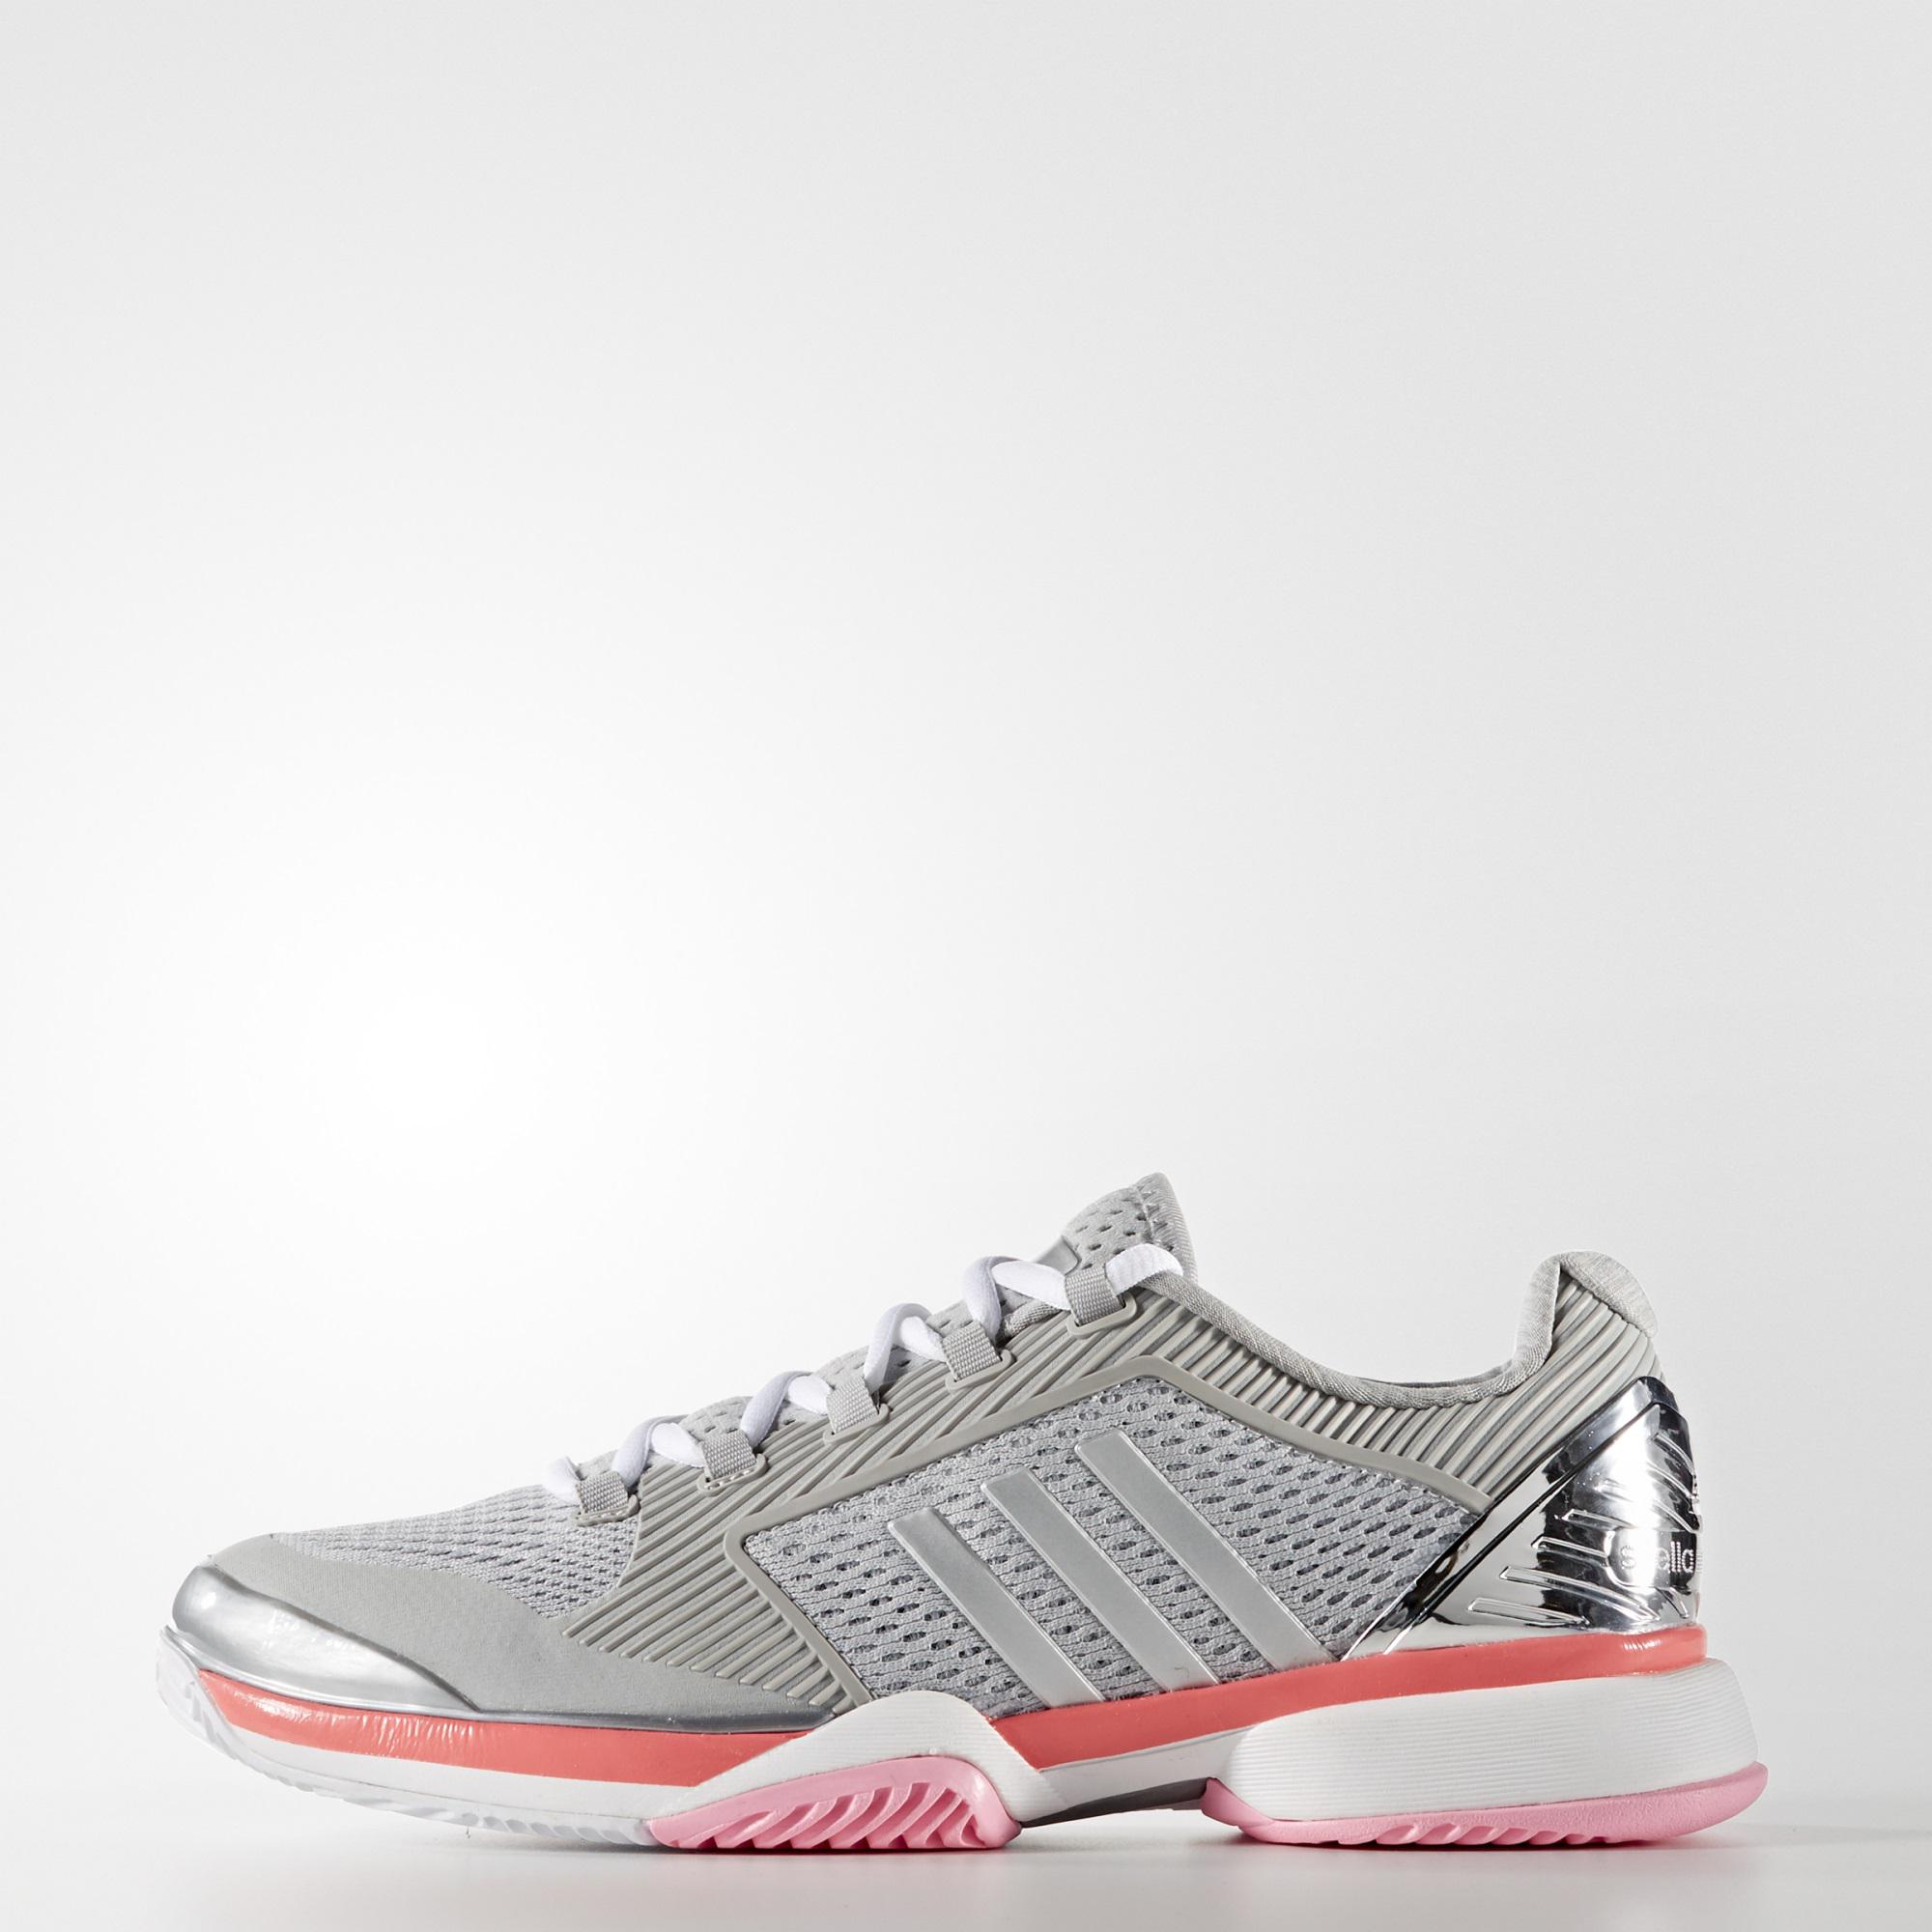 Adidas Womens SMC Barricade 2016 Tennis Shoes - Silver - Tennisnuts.com